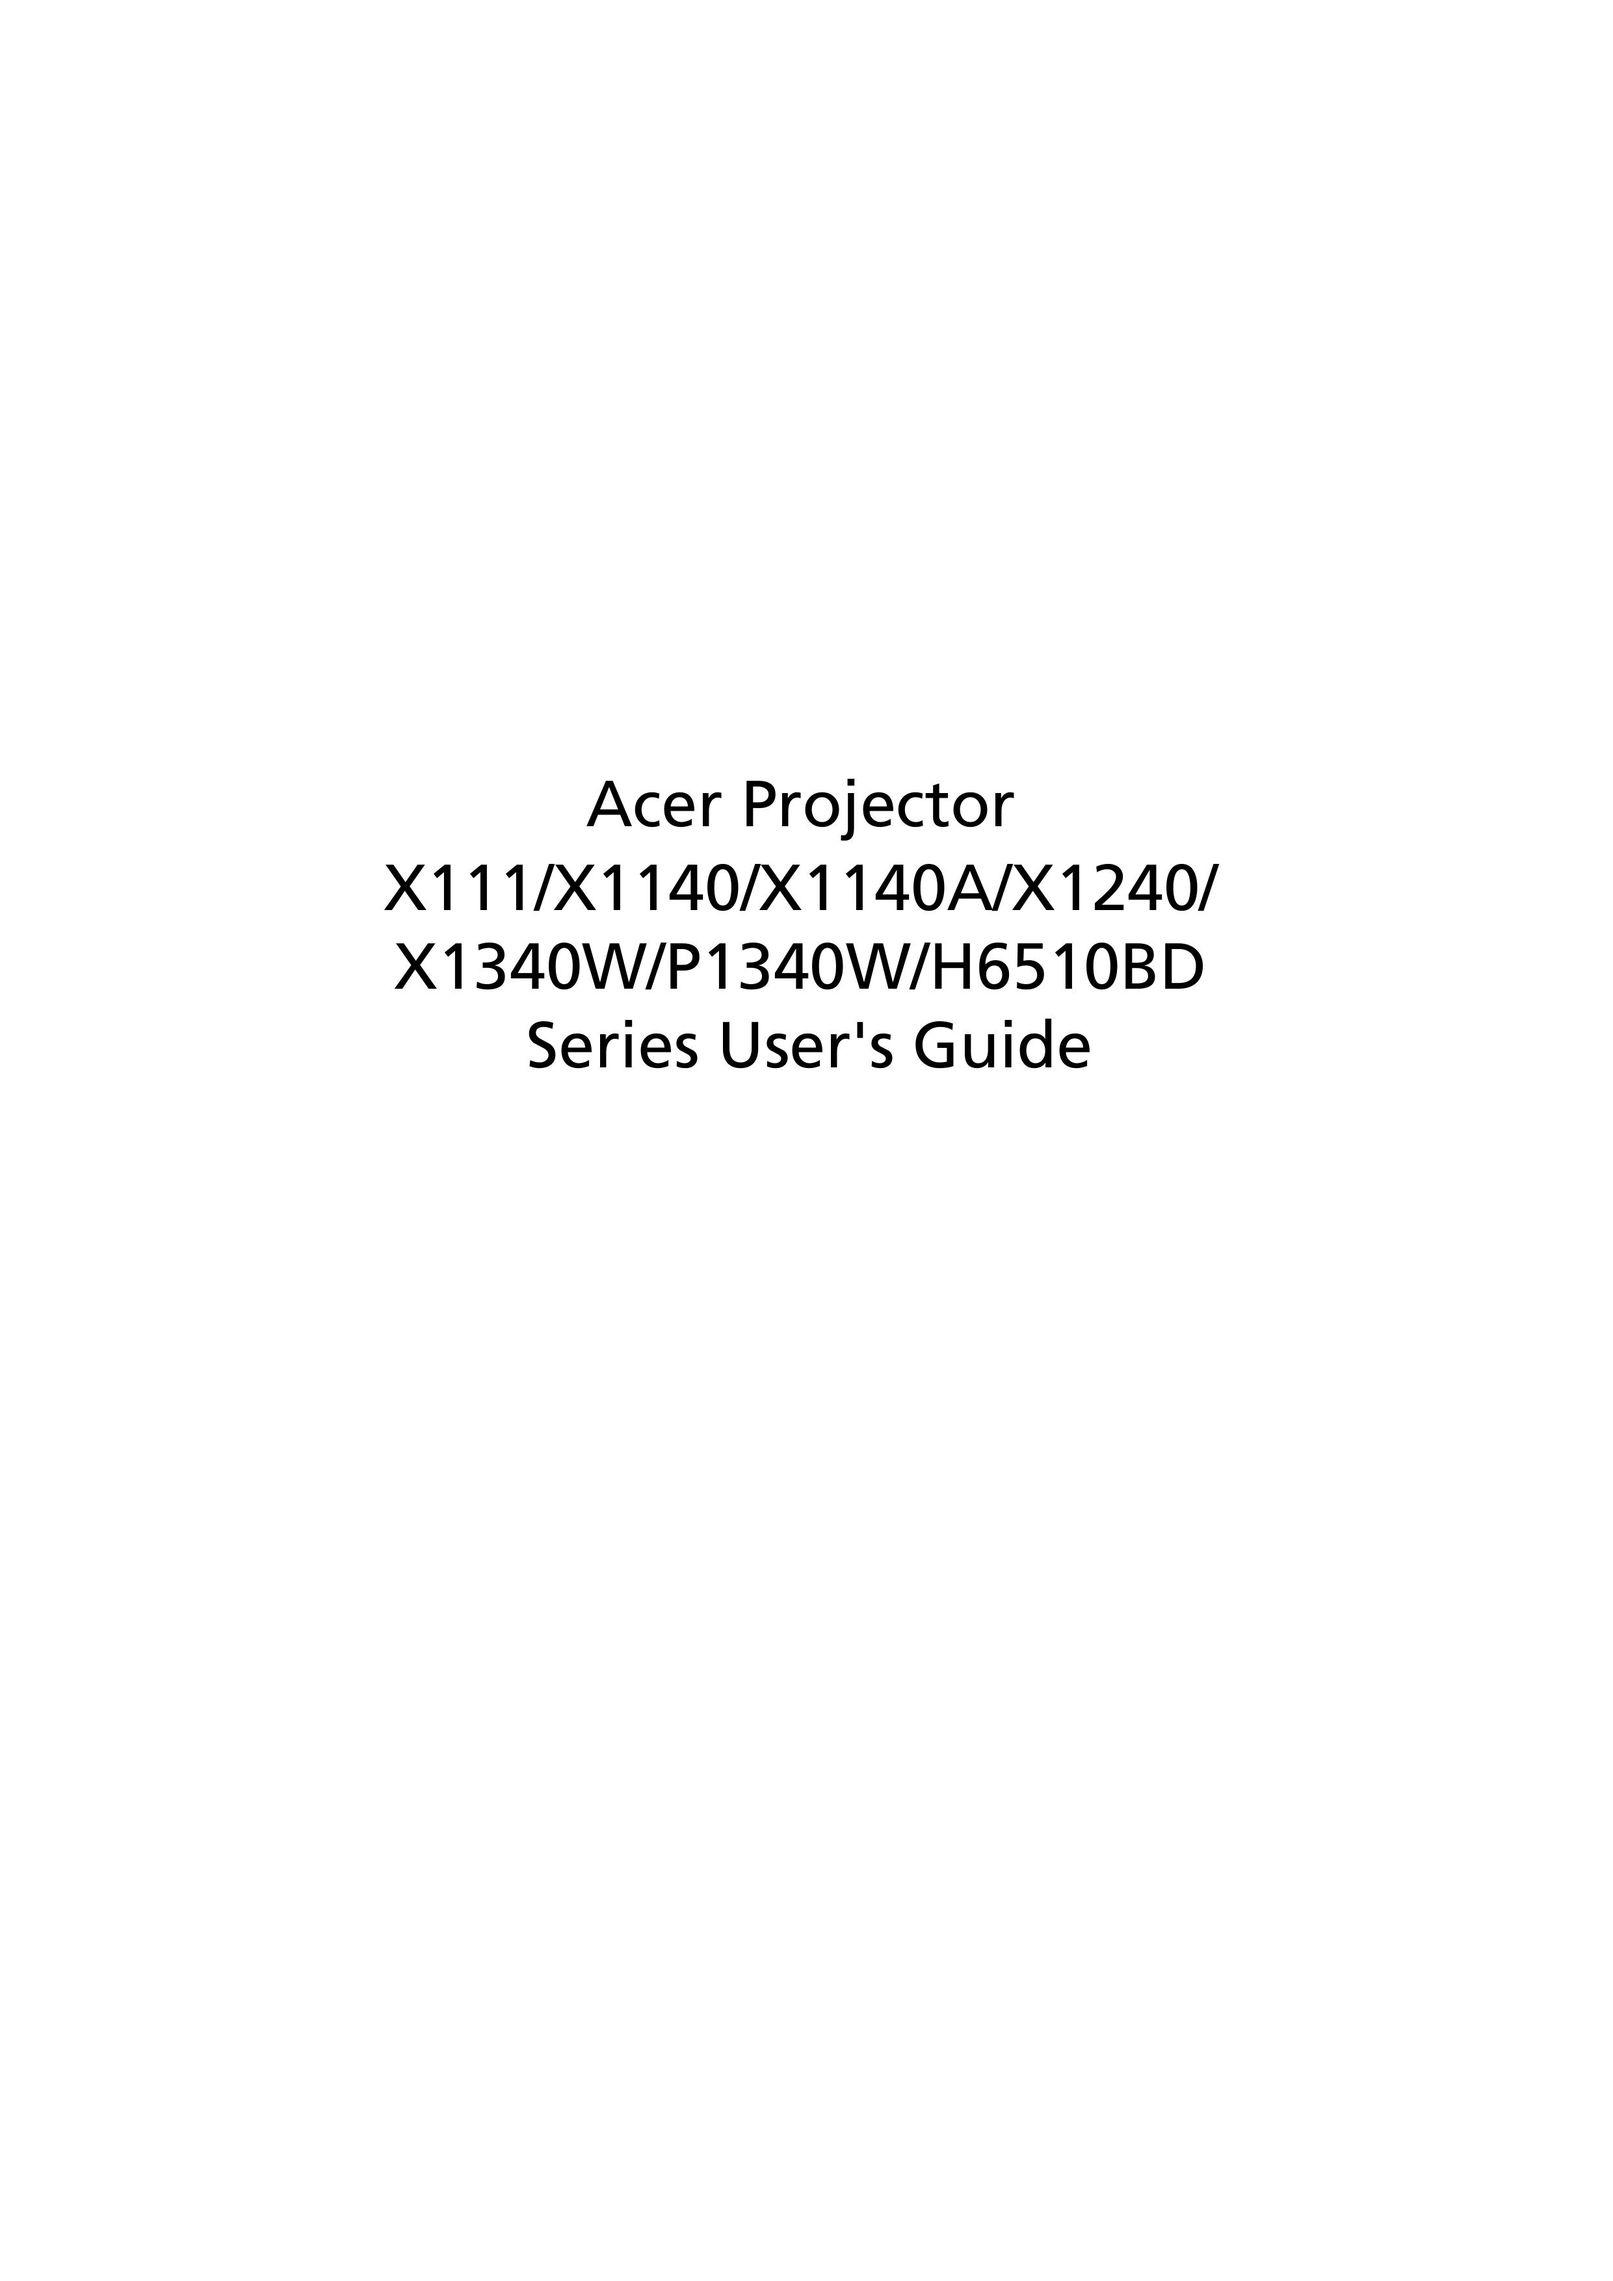 Acer MRJFZ1100A Projector User Manual